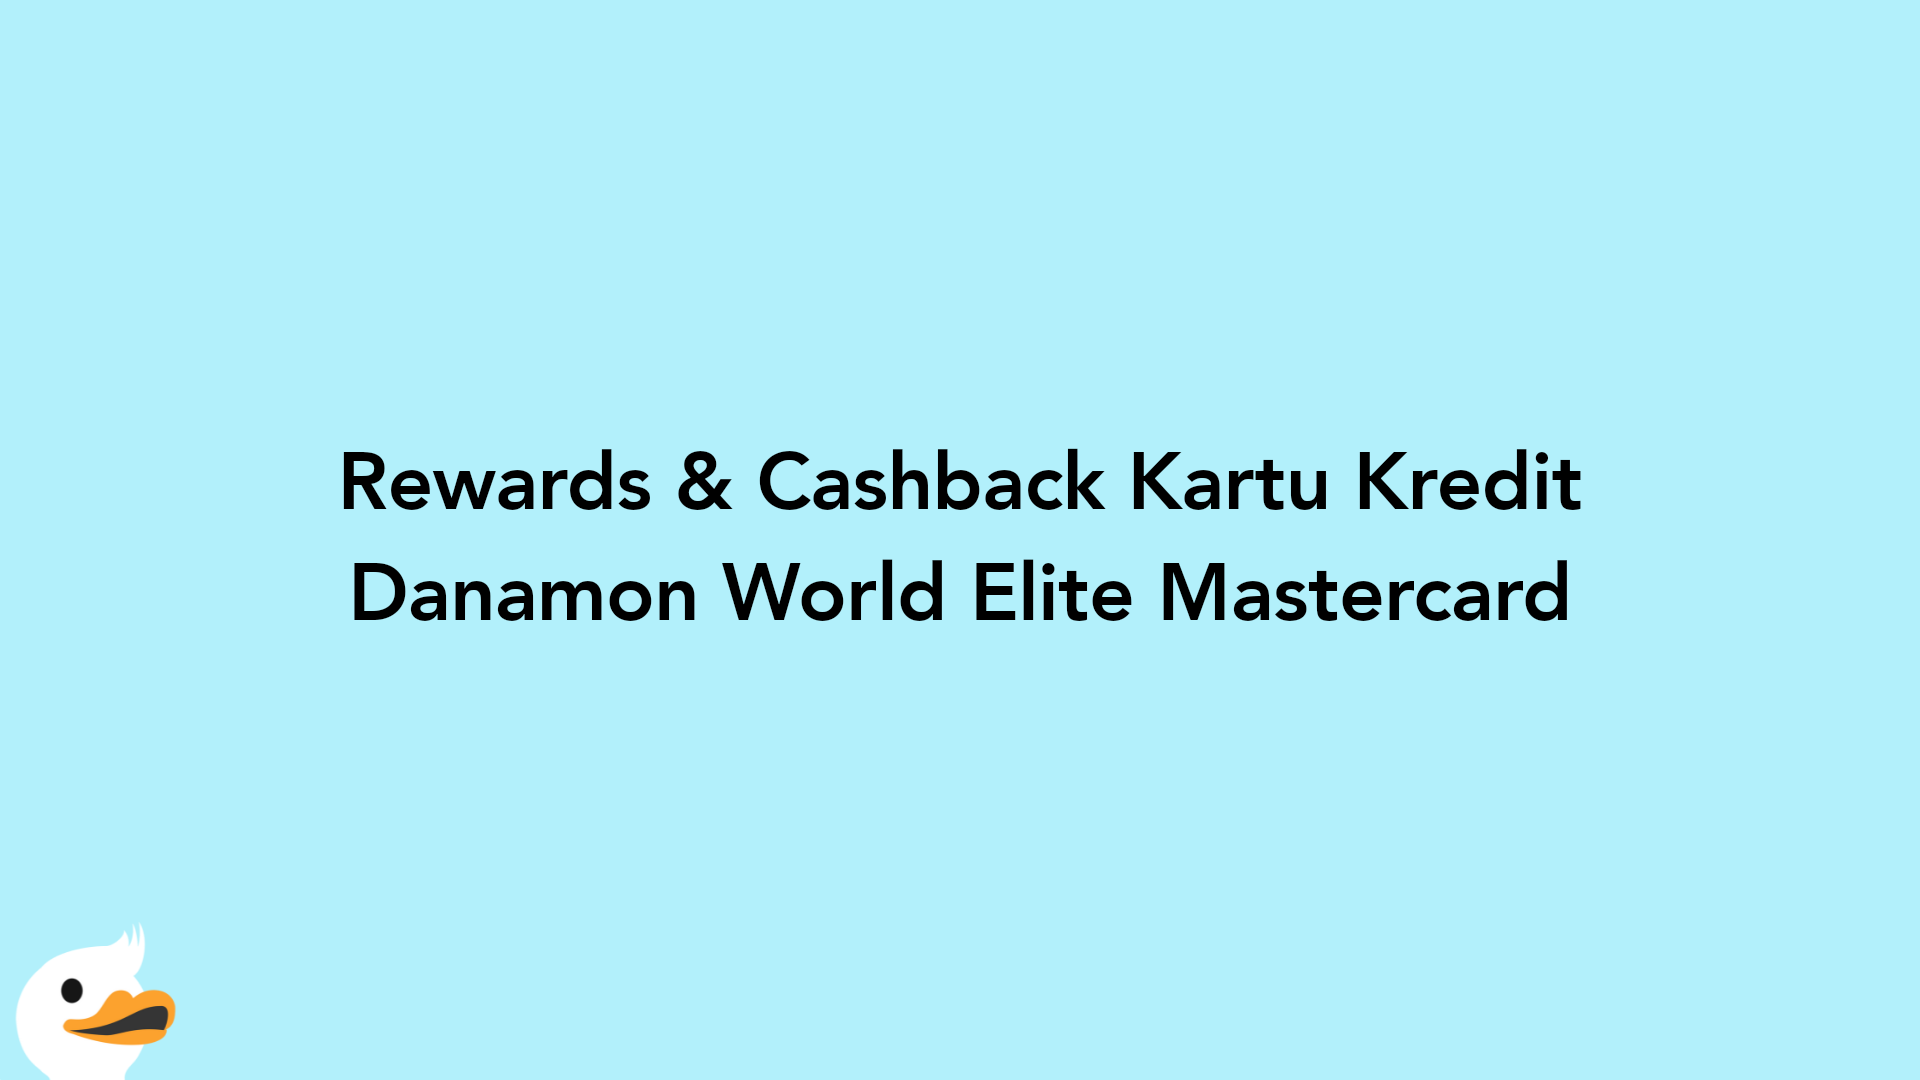 Rewards & Cashback Kartu Kredit Danamon World Elite Mastercard